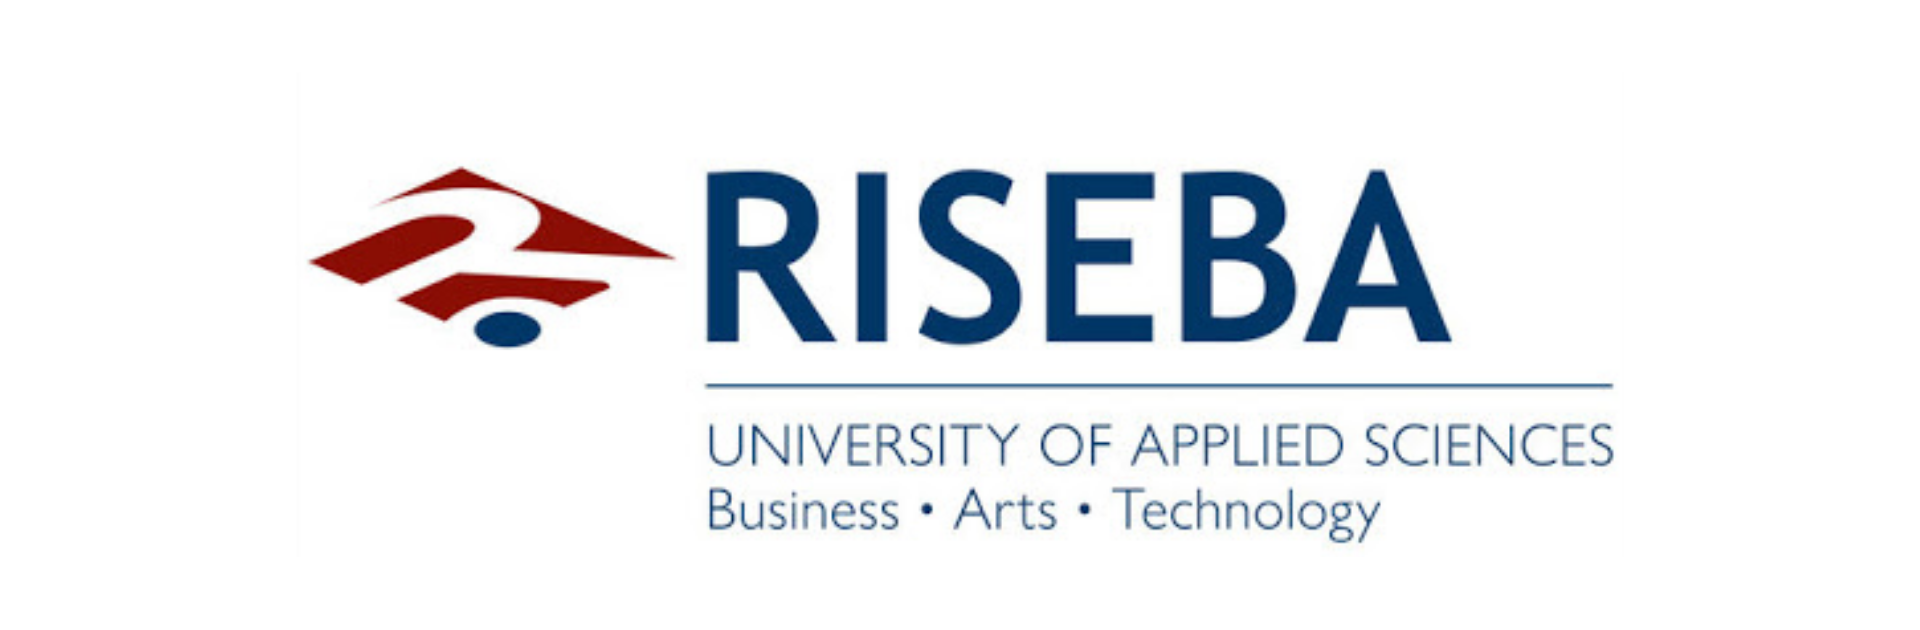 RISEBA University of Applied Sciences 